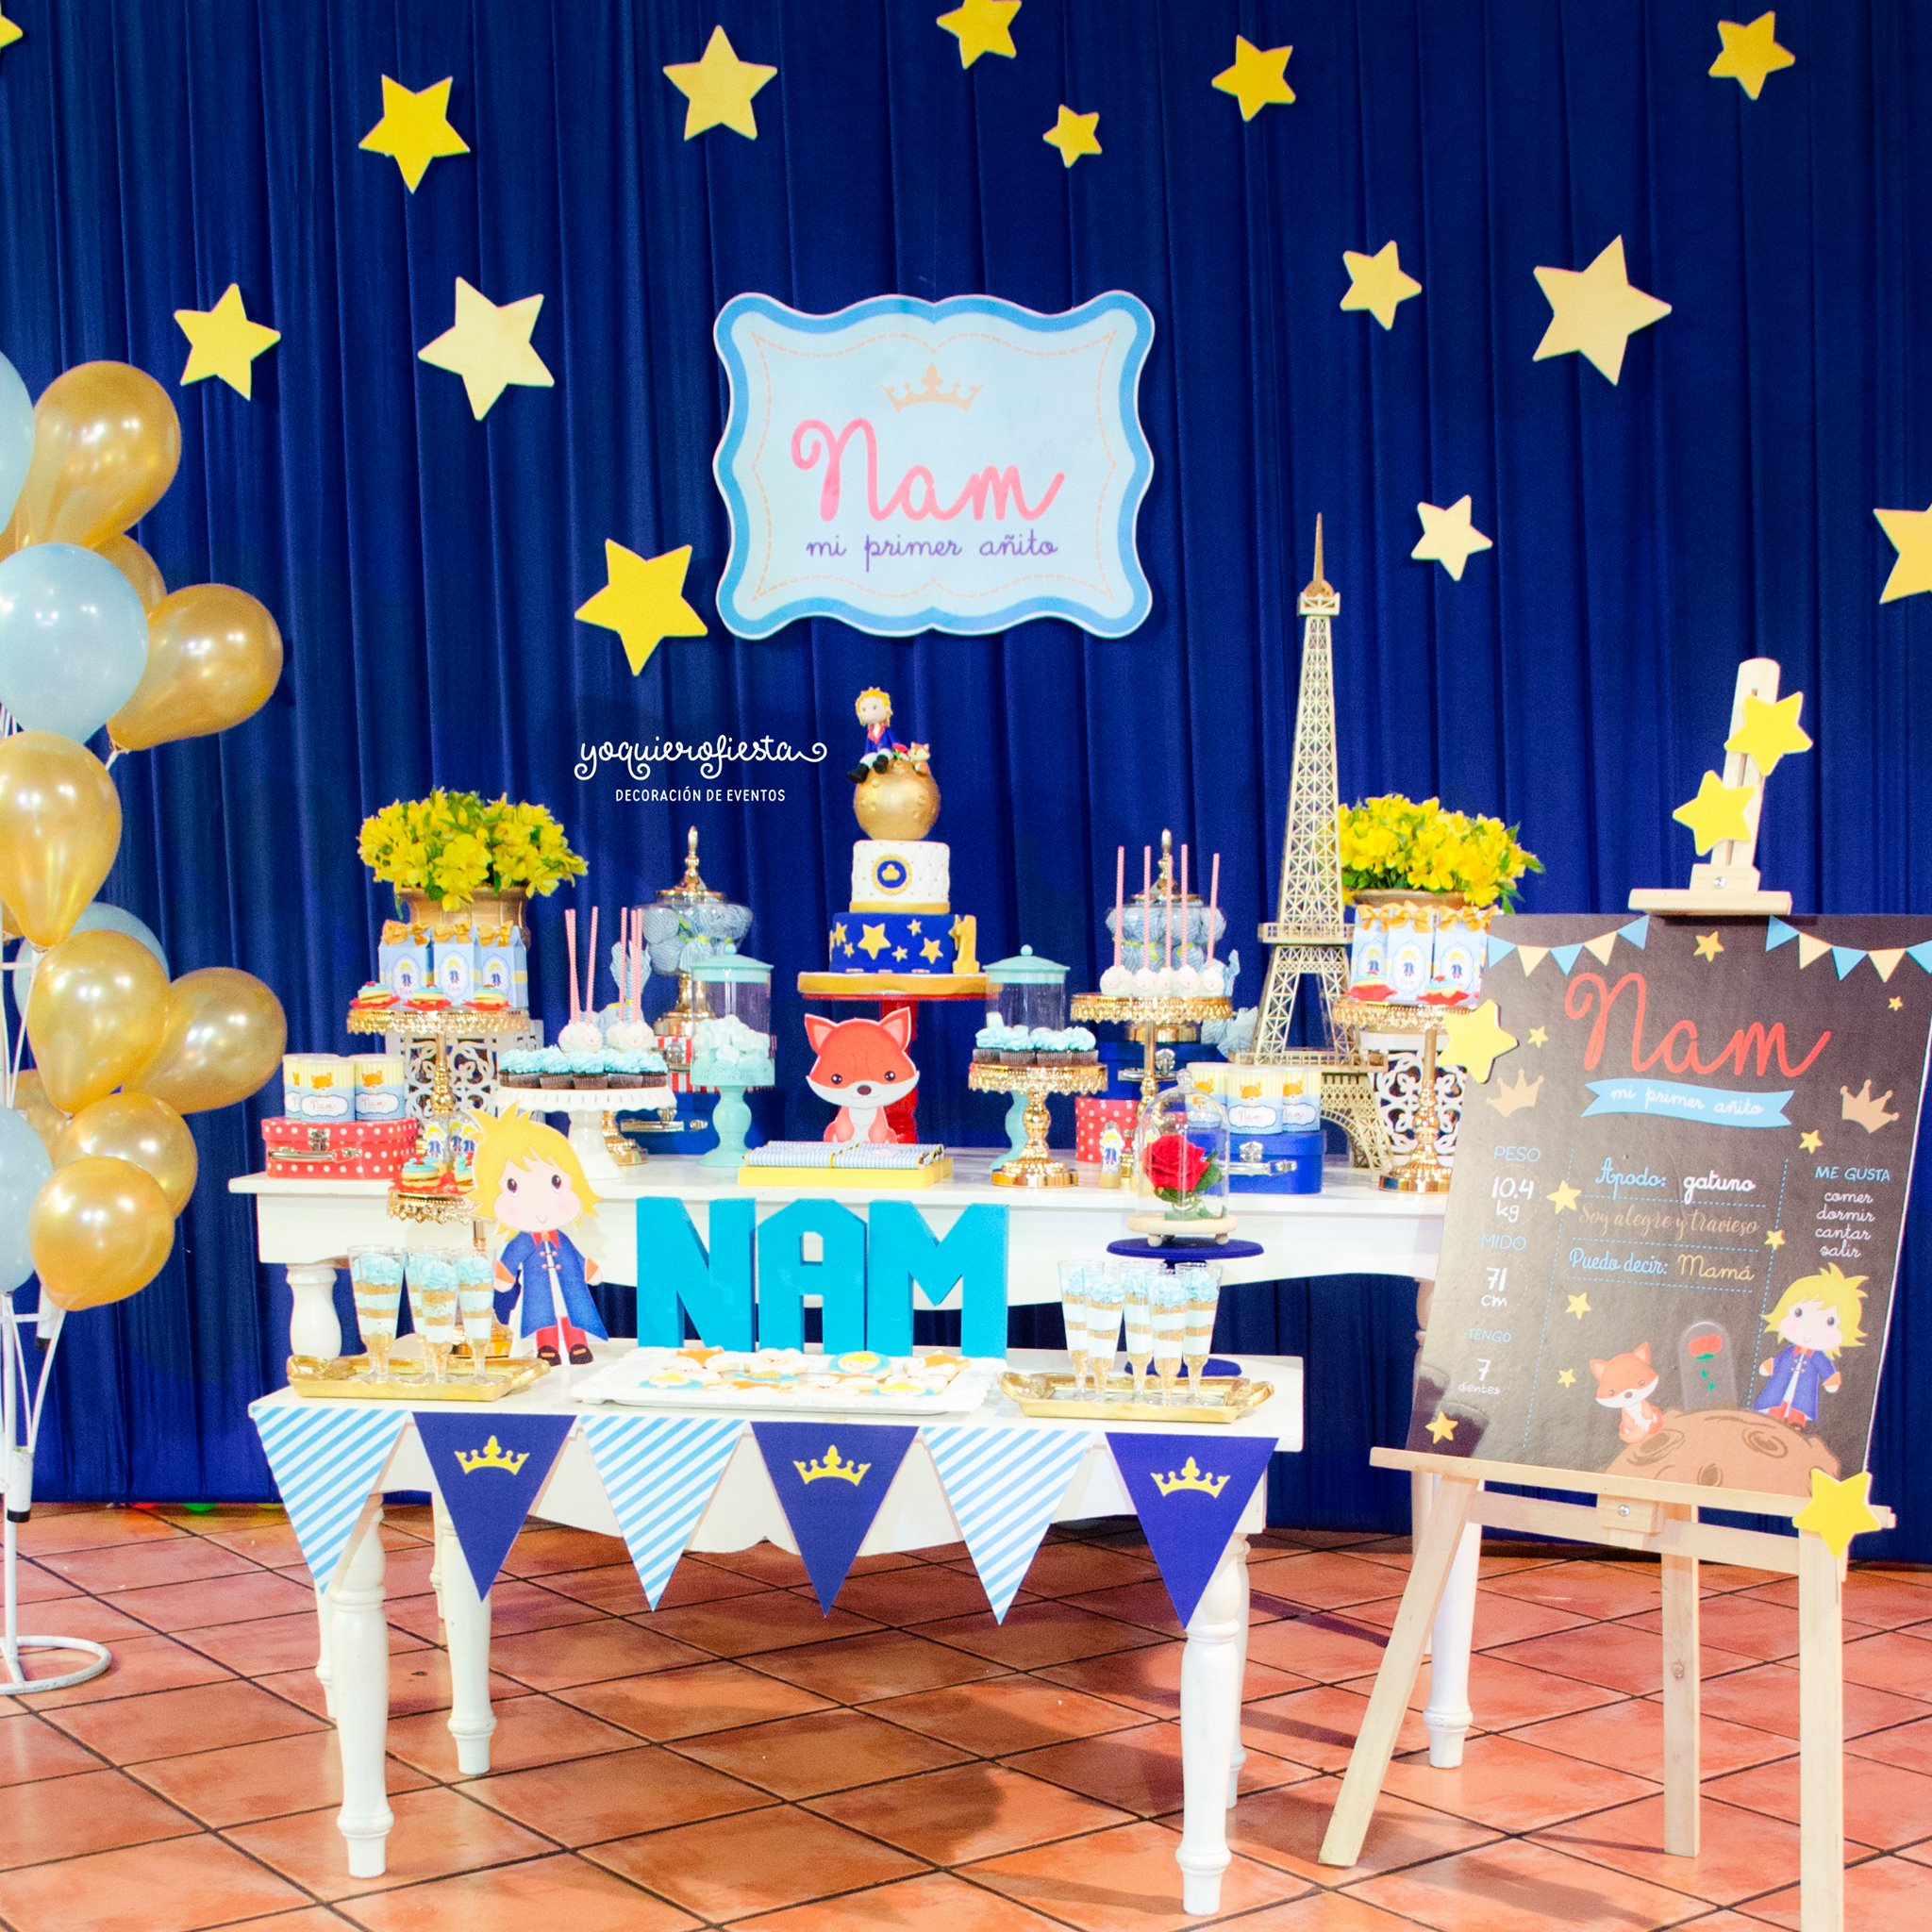 decoracion salon de 50 de hombre - Buscar con Google  Gold birthday party,  50th birthday party, 75th birthday party decorations